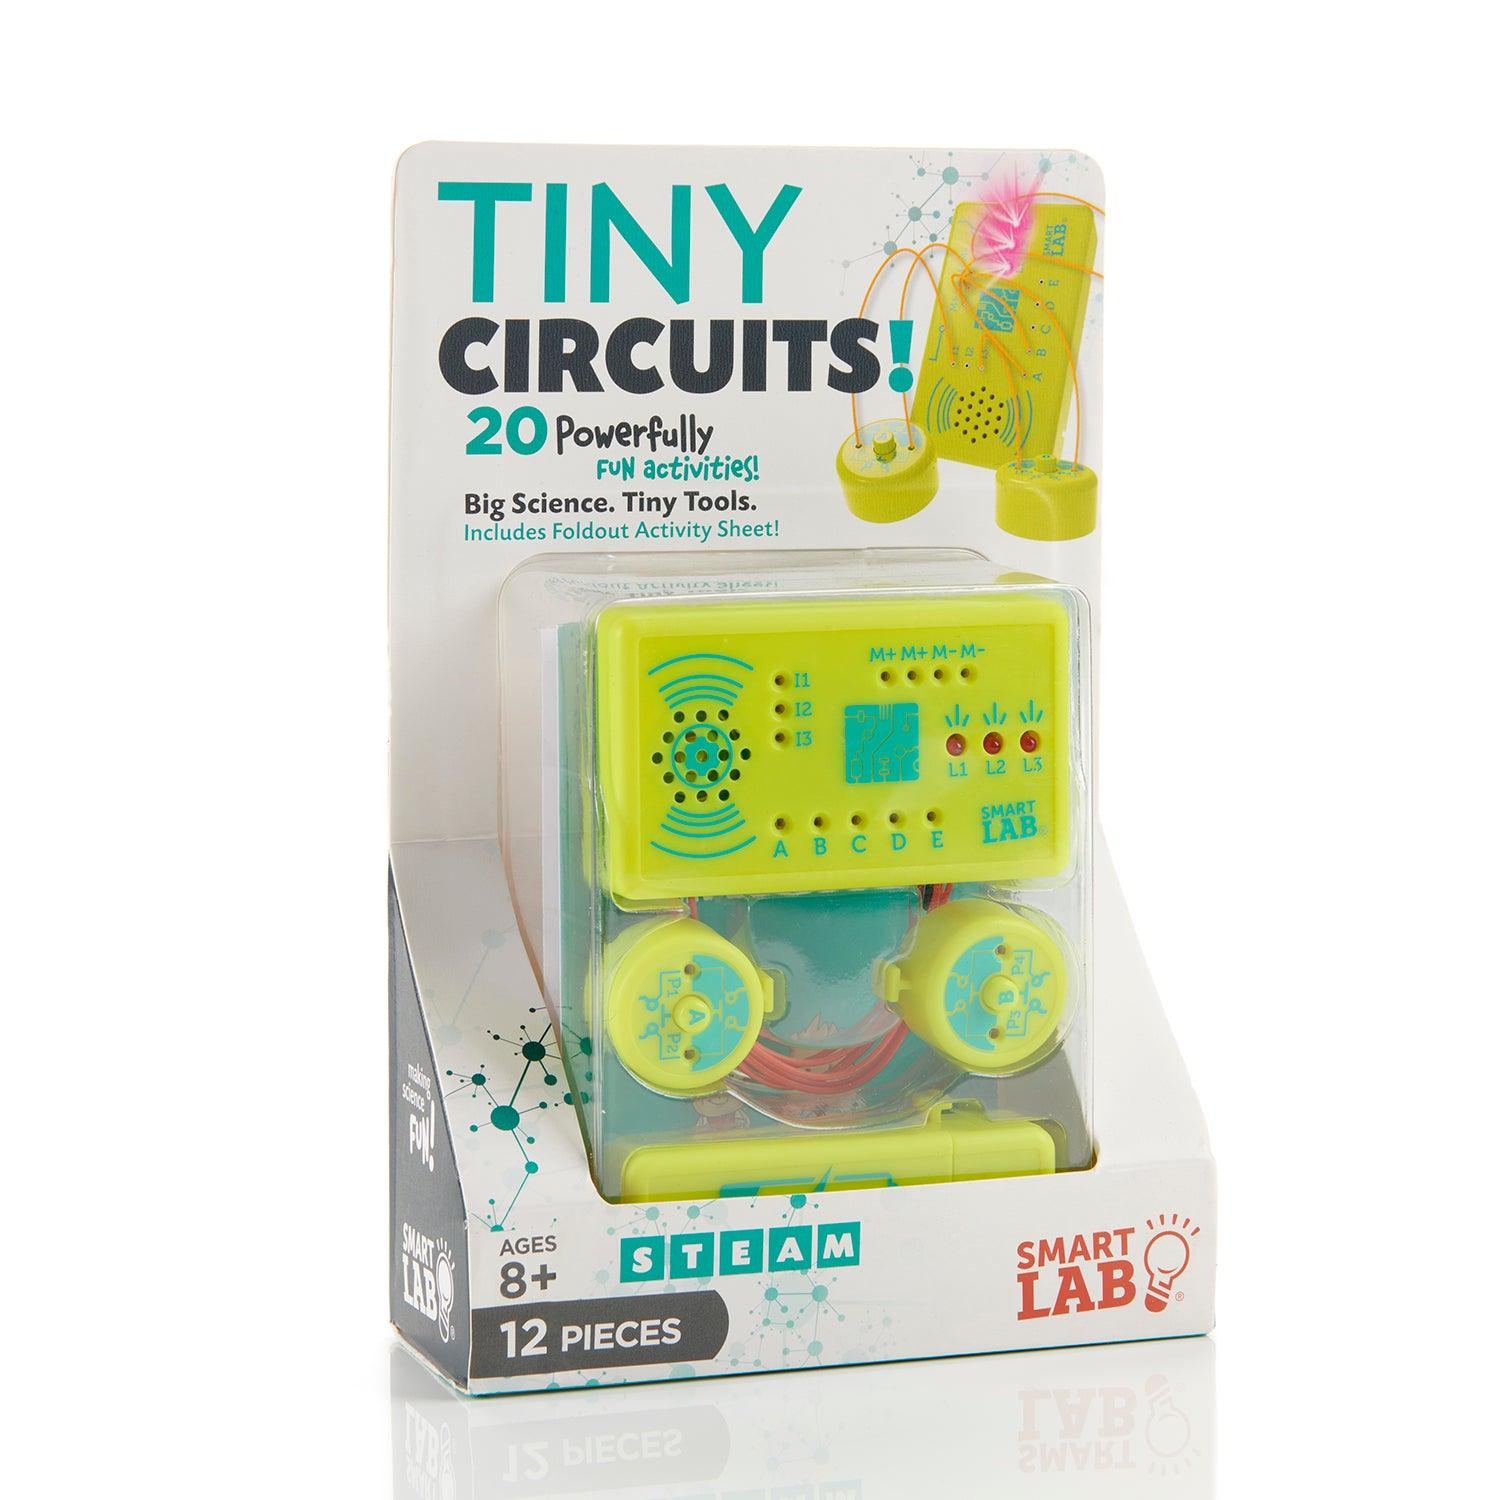 Tiny Circuits Kit - Kits - Science Museum Shop